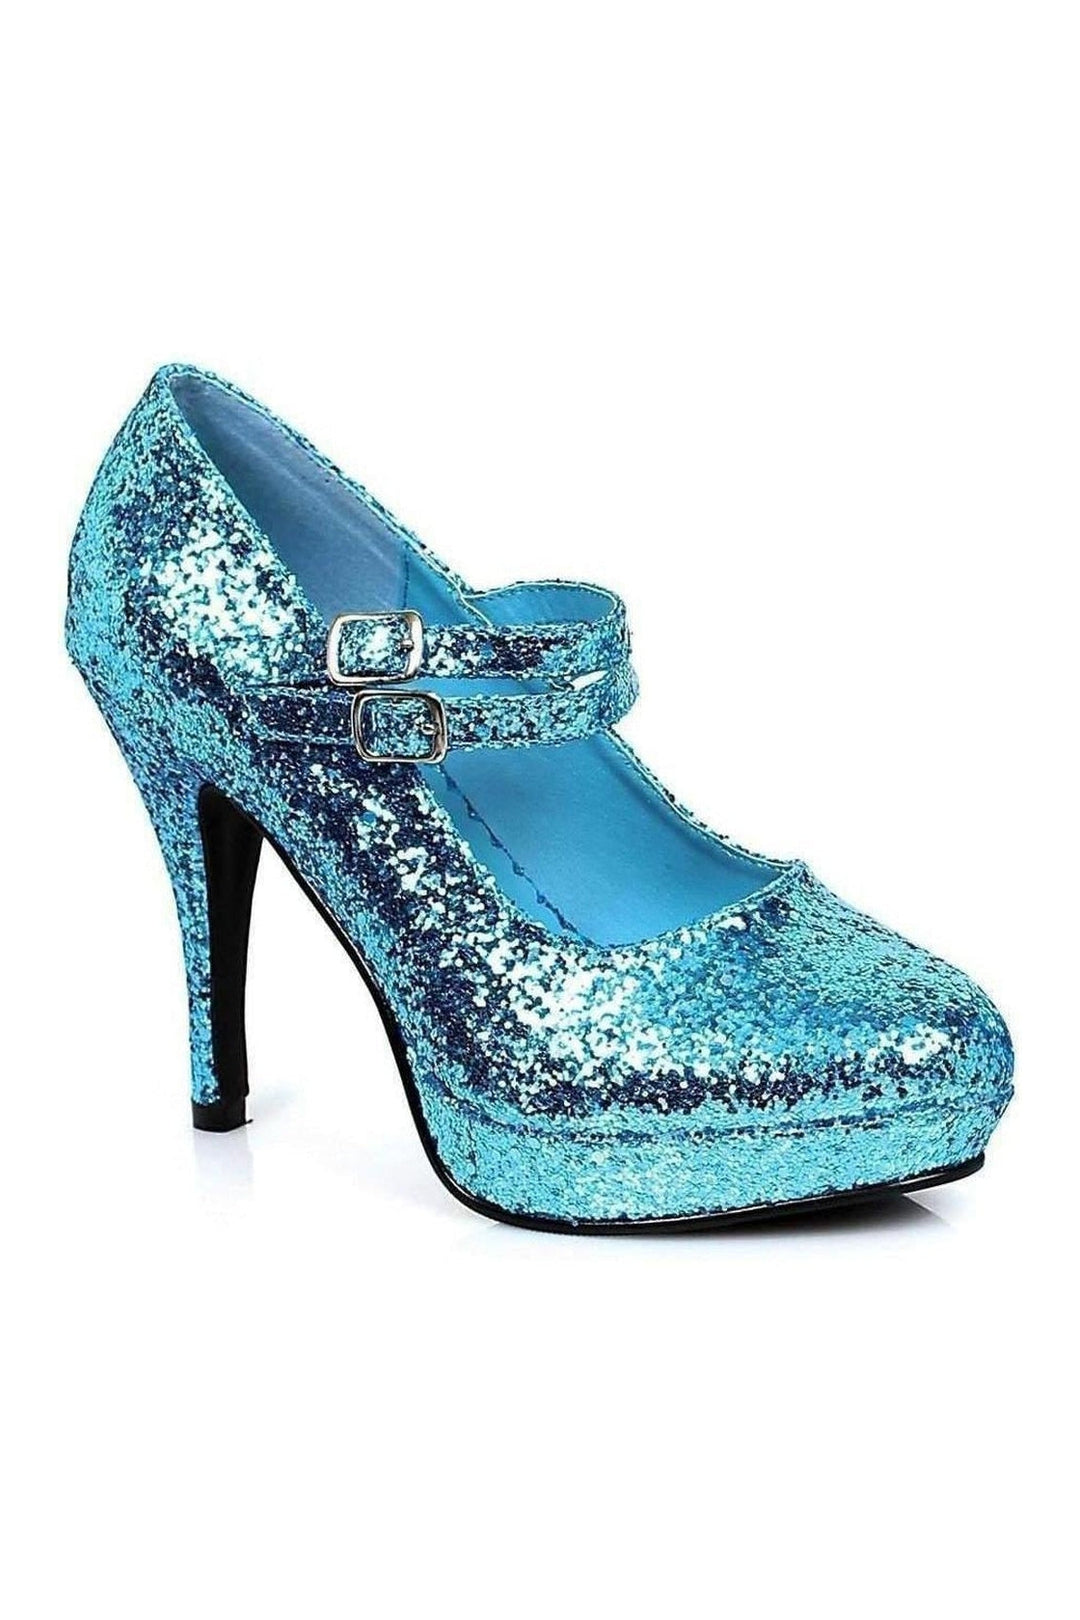 421-JANE-G Mary Jane | Blue Glitter-Ellie Shoes-Blue-Mary Janes-SEXYSHOES.COM